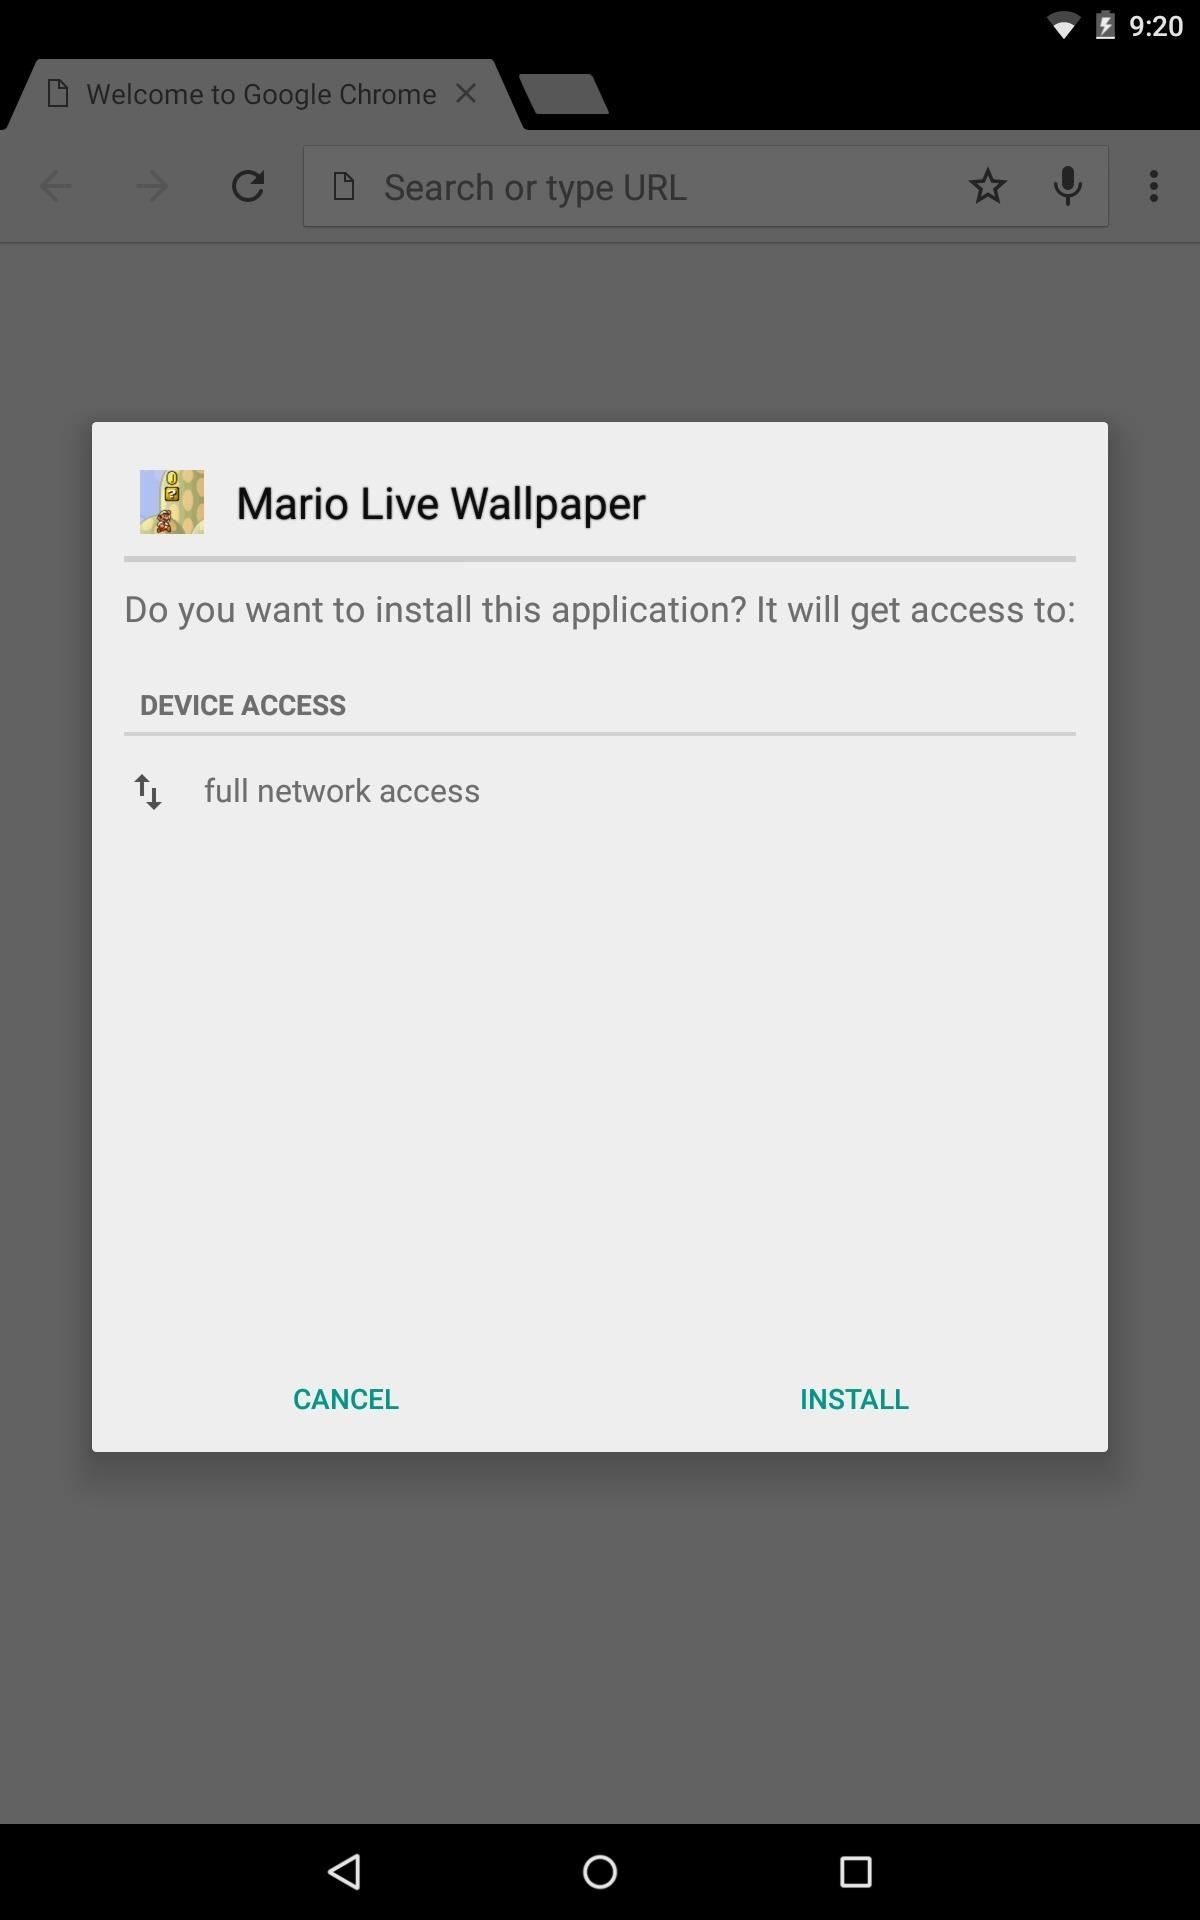 Mario Live Wallpaper - Menu Google Chrome Android - 1200x1920 Wallpaper -  